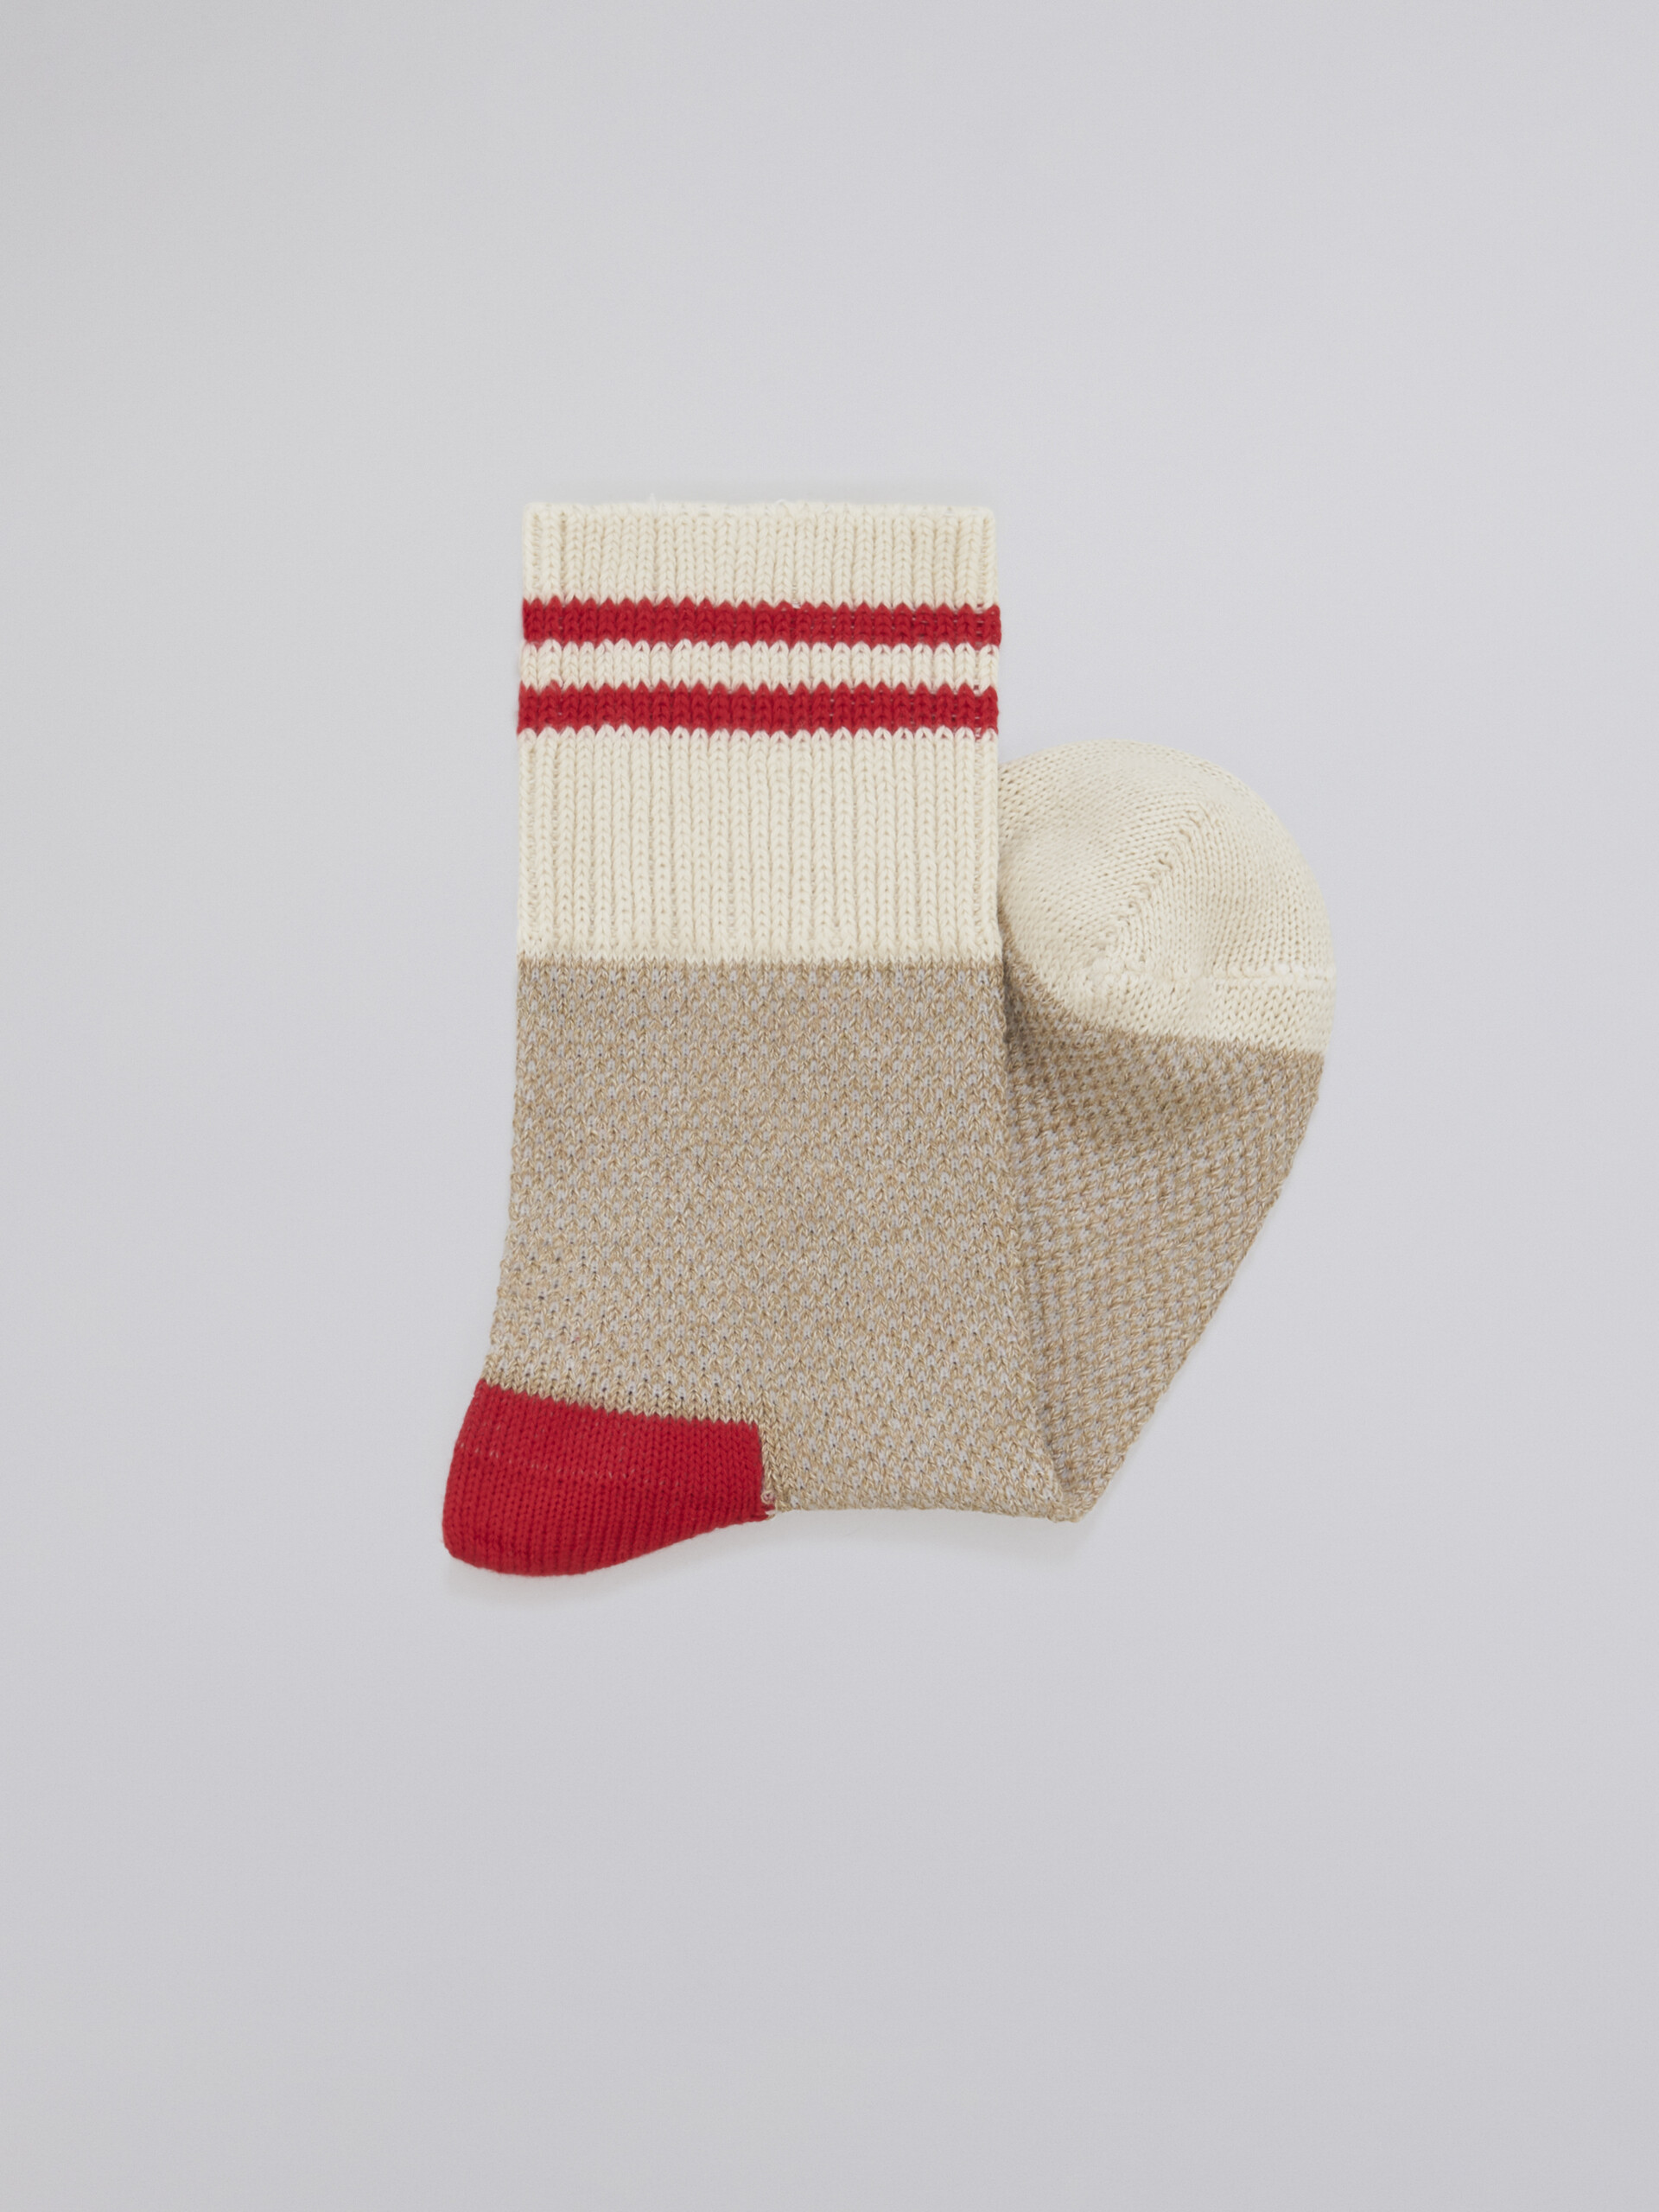 Natural mouliné cotton sock - Socks - Image 2